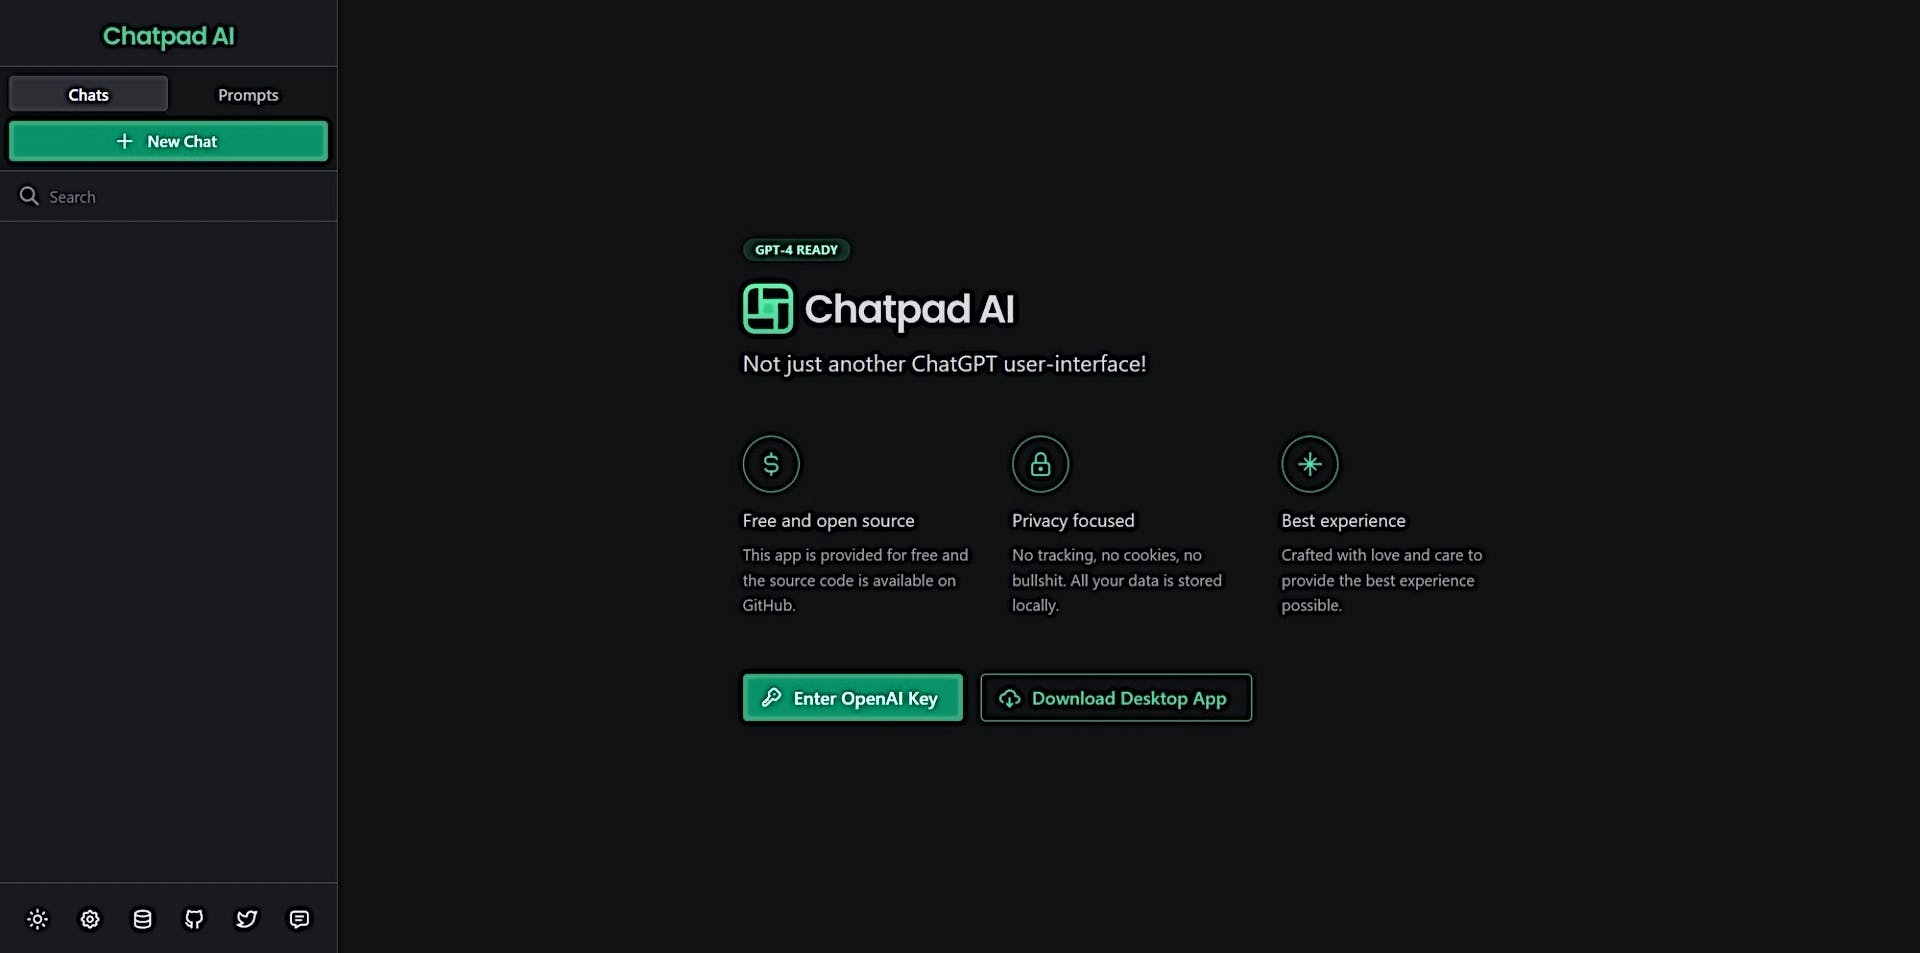 Chatpad AI featured